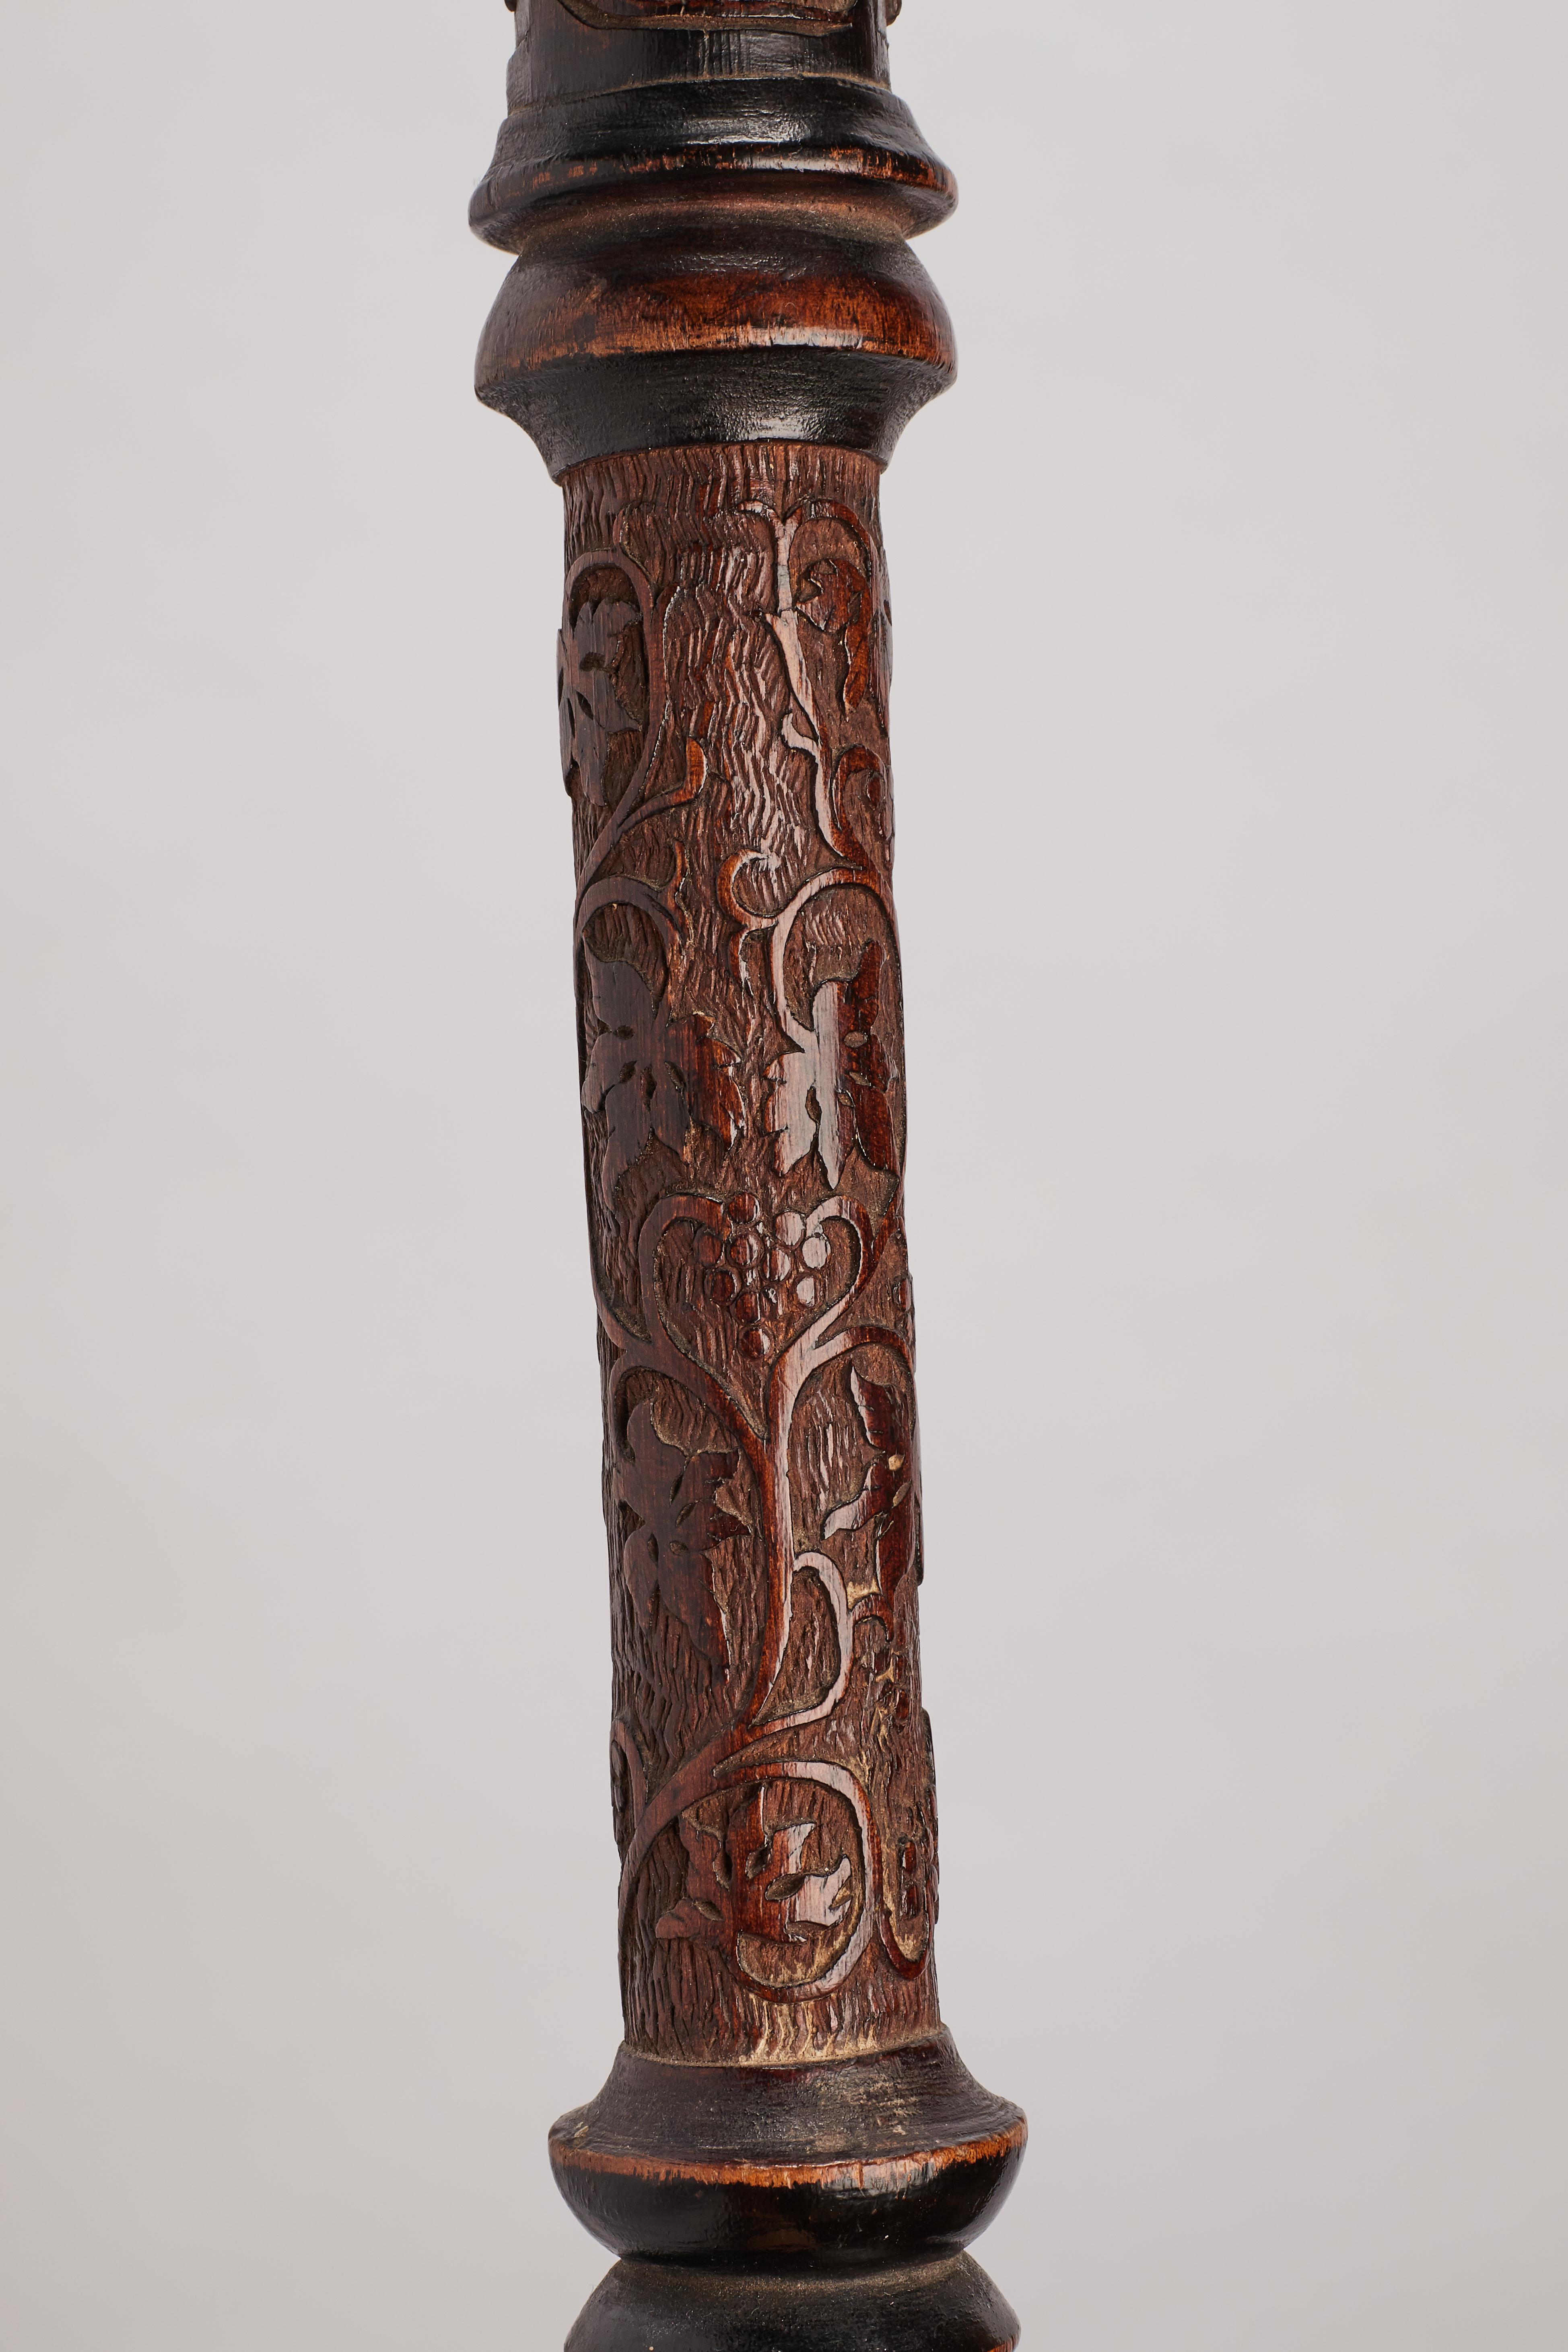 Iron System Folk Art Walking Stick, France, 1880